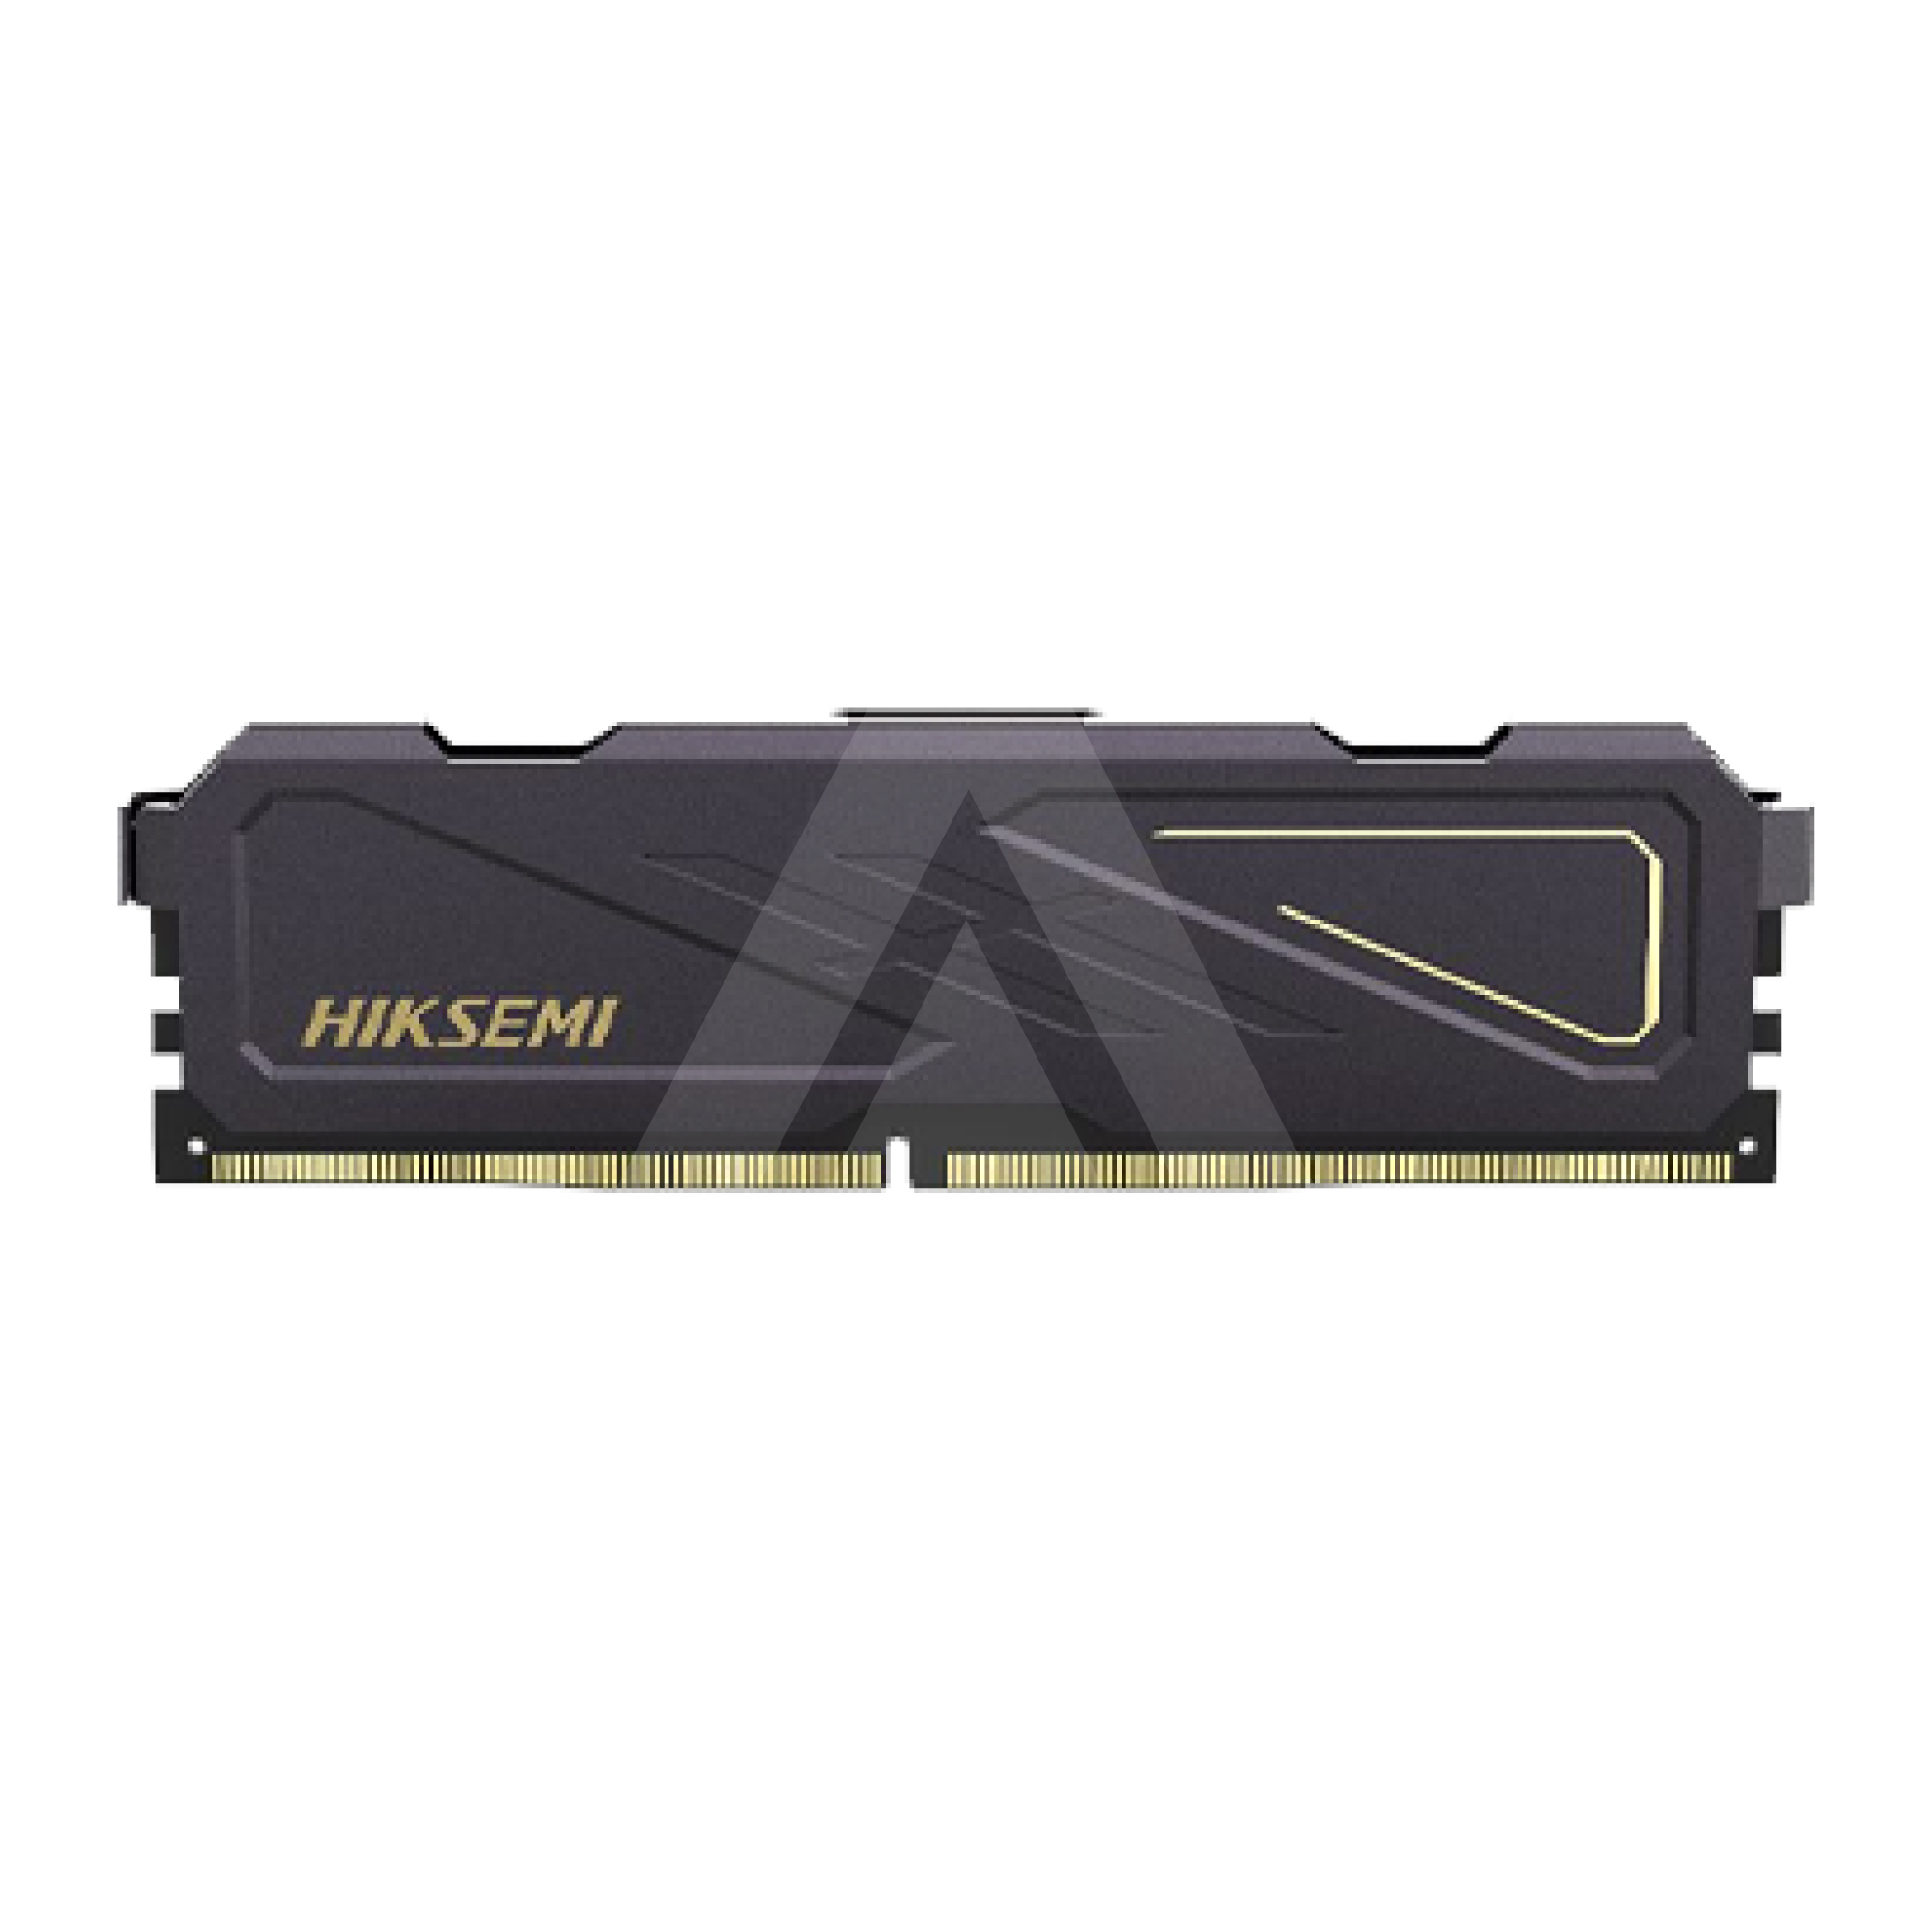 DDR4 3200 HIKSEMI MEMORIA RAM 3200MHZ 8GB UDIMM 288PIN LIFETIME